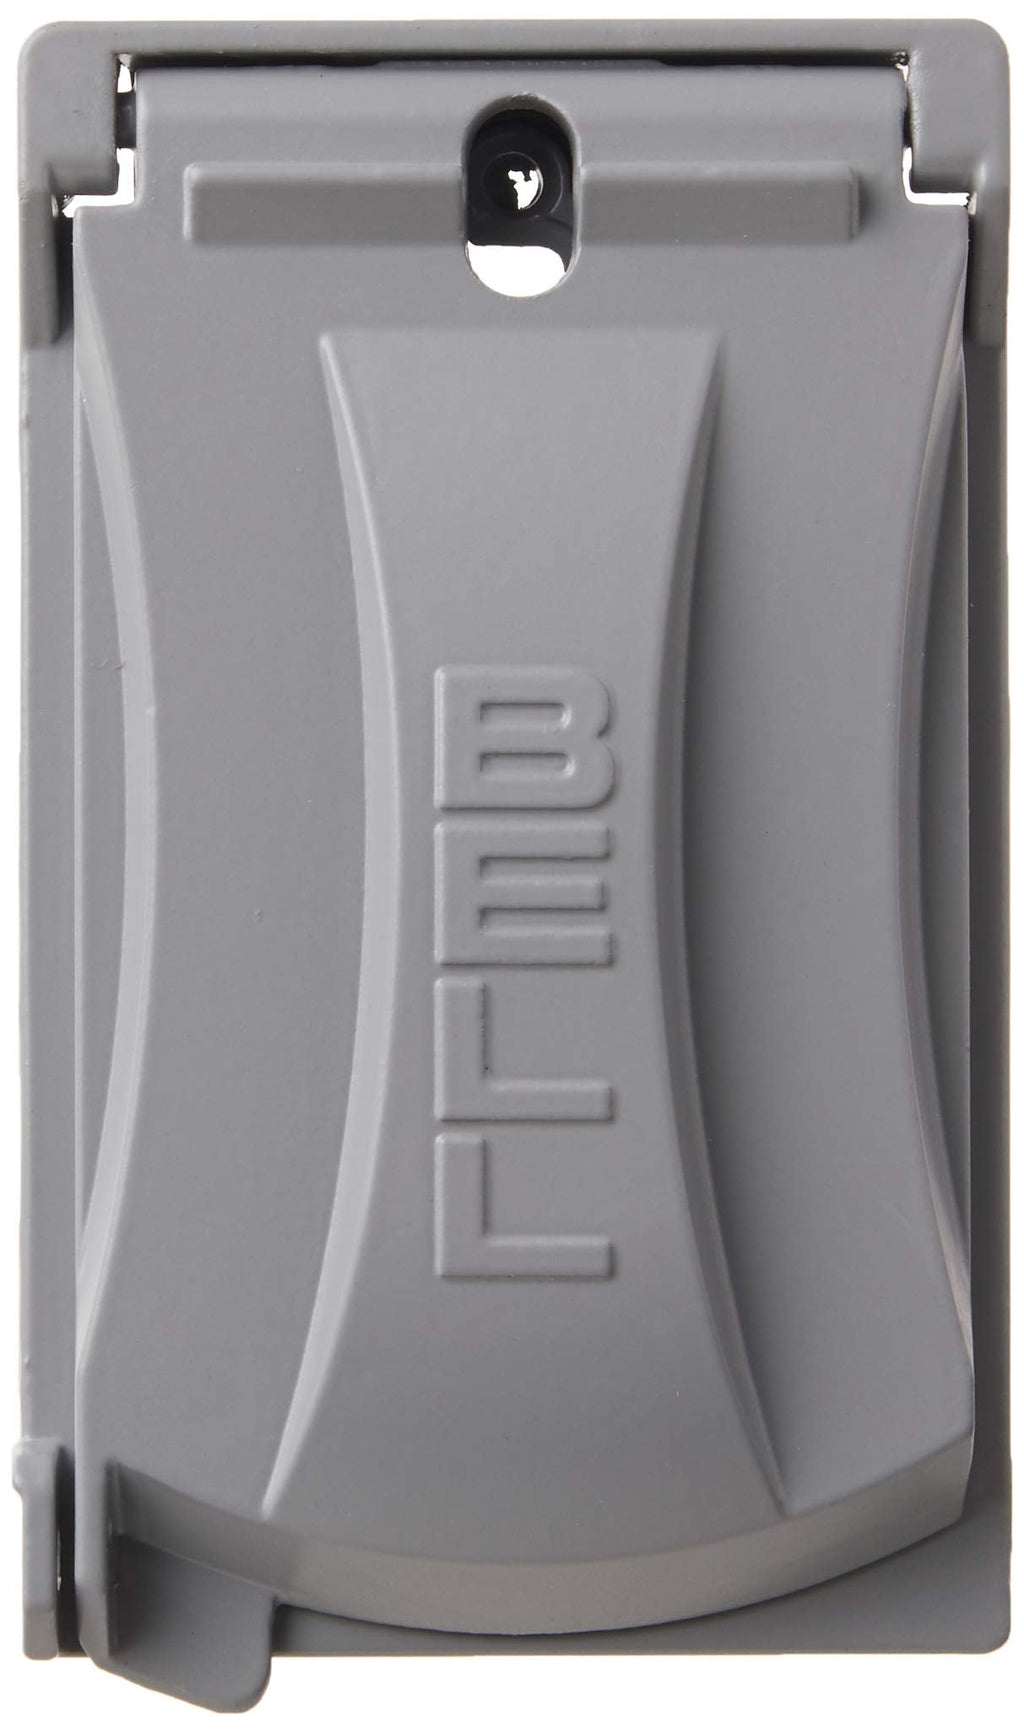  [AUSTRALIA] - Hubbell Bell MX1050S Single-Gang Weatherproof Heavy Duty Universal Flip Cover Gray Finish